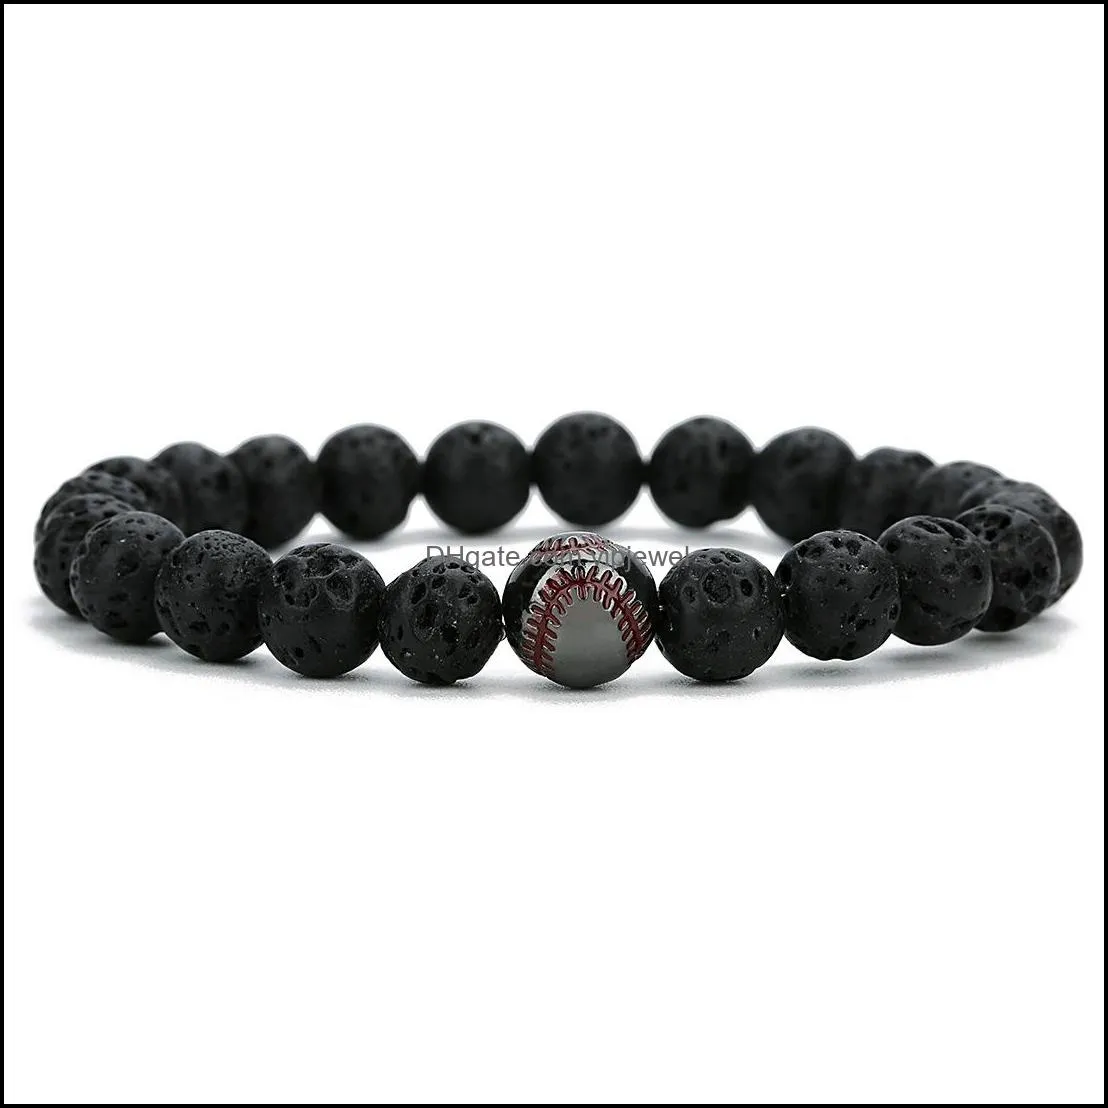 copper baseball ball charms strand bracelet 8mm black lava stone beads volcano diy  oil diffuser bracelets wristband jewelry